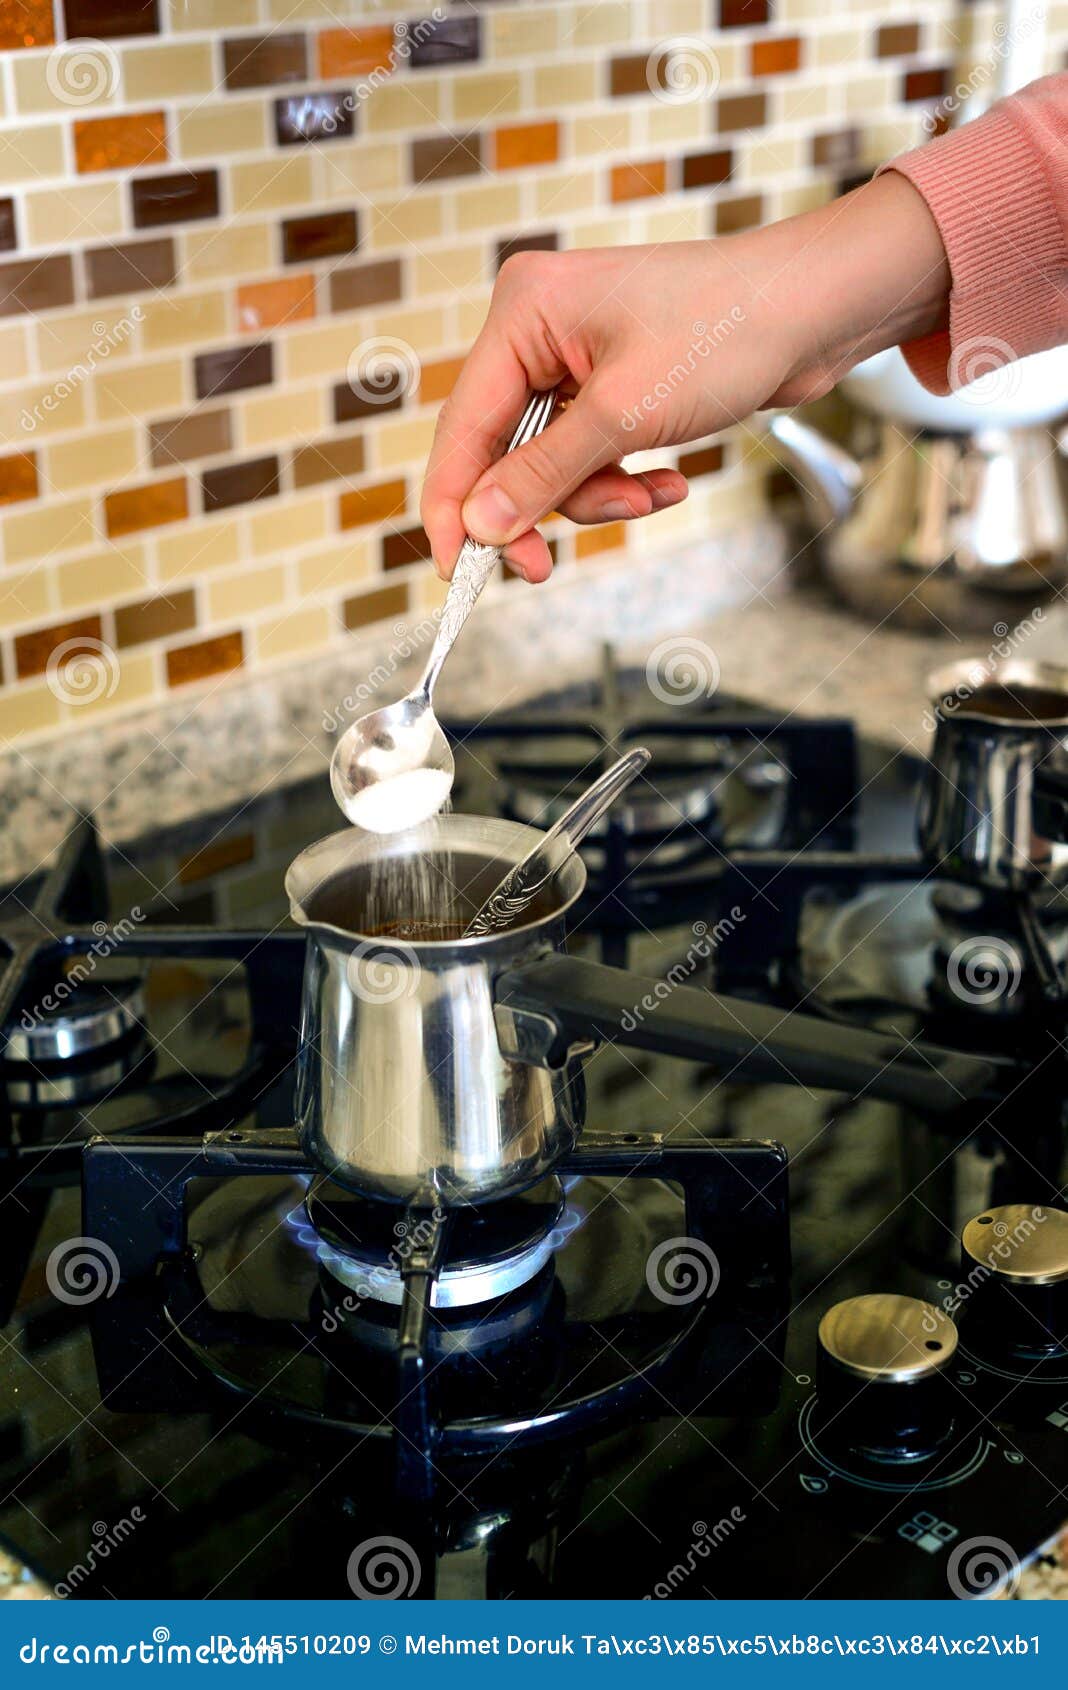 Adding sugar into the coffee pot on the oven preparing turkish coffee